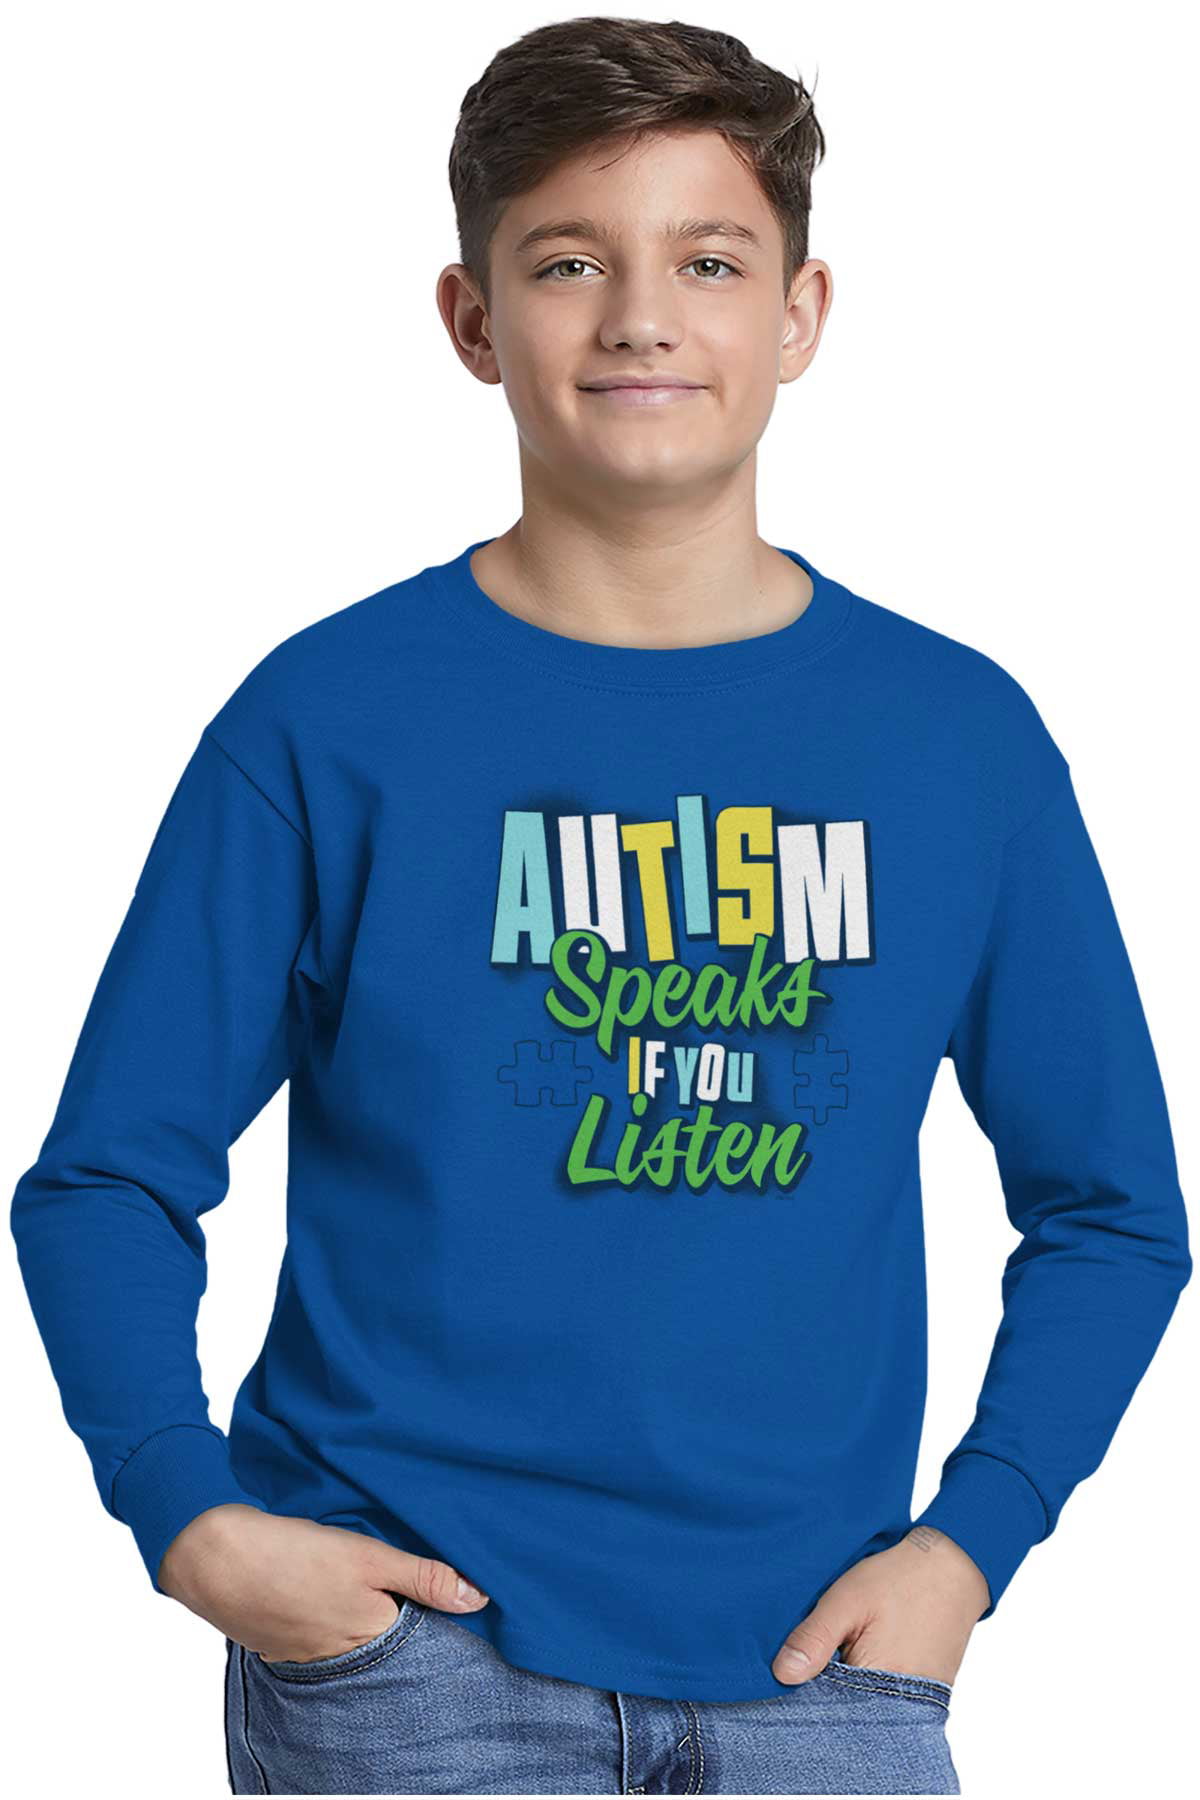 Standard Unisex Standard Unisex T-shirt Details about   Trendy Autism Awareness Different